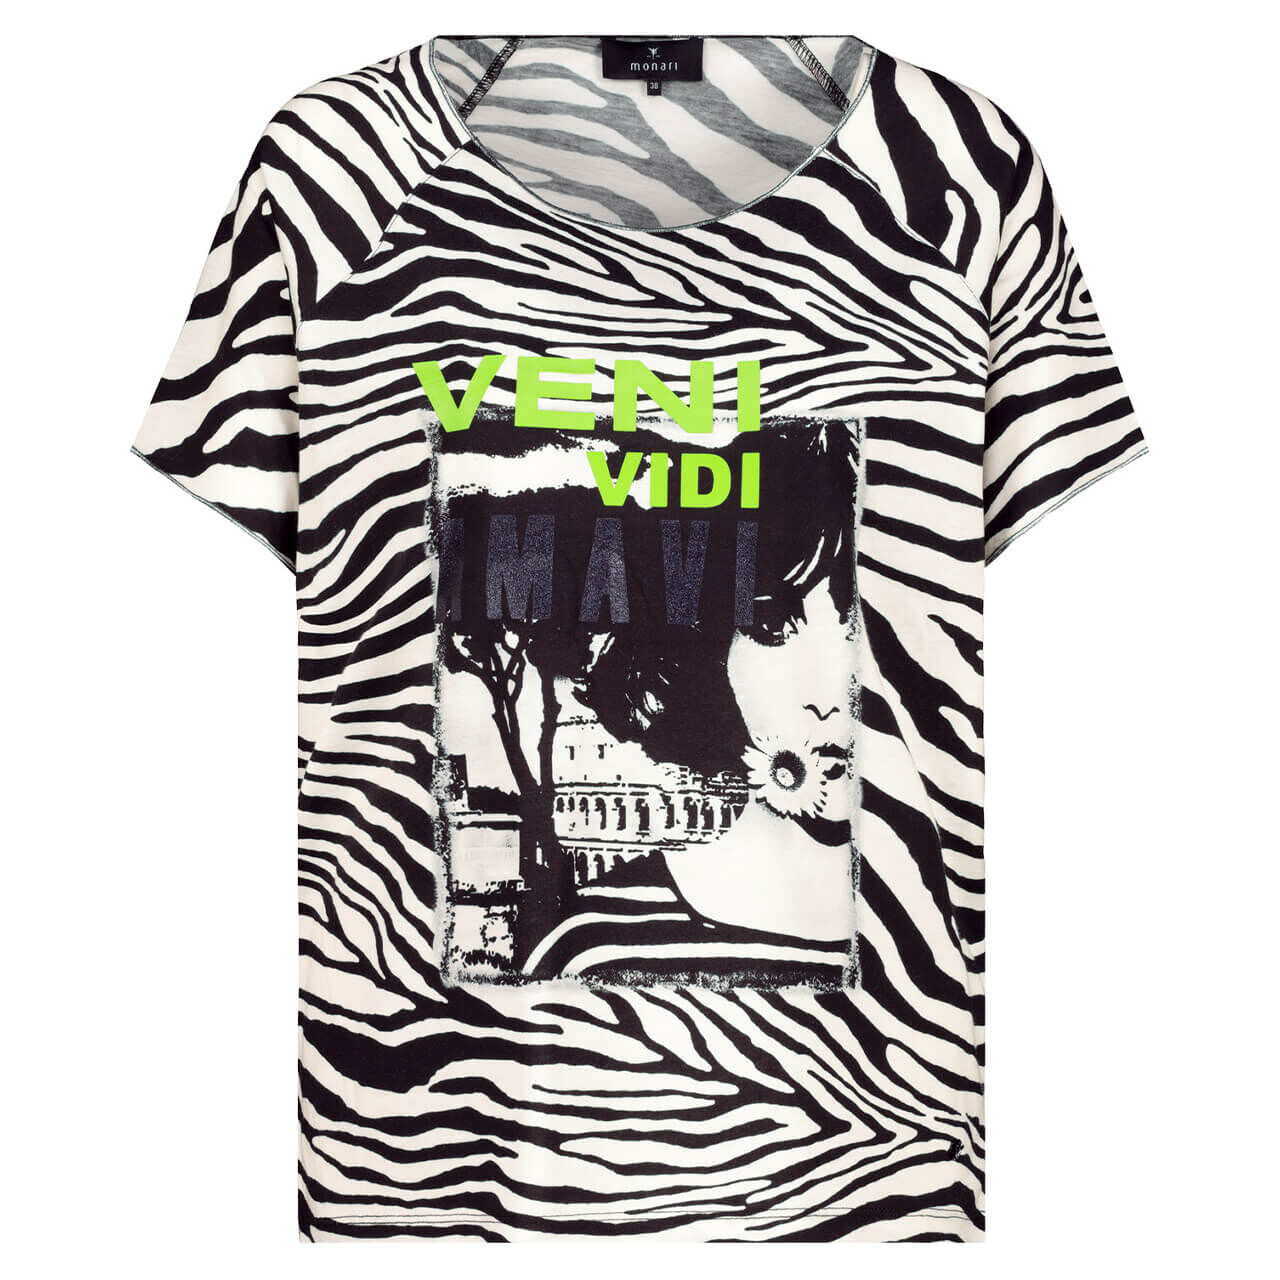 Monari Damen T-Shirt black zebra printed